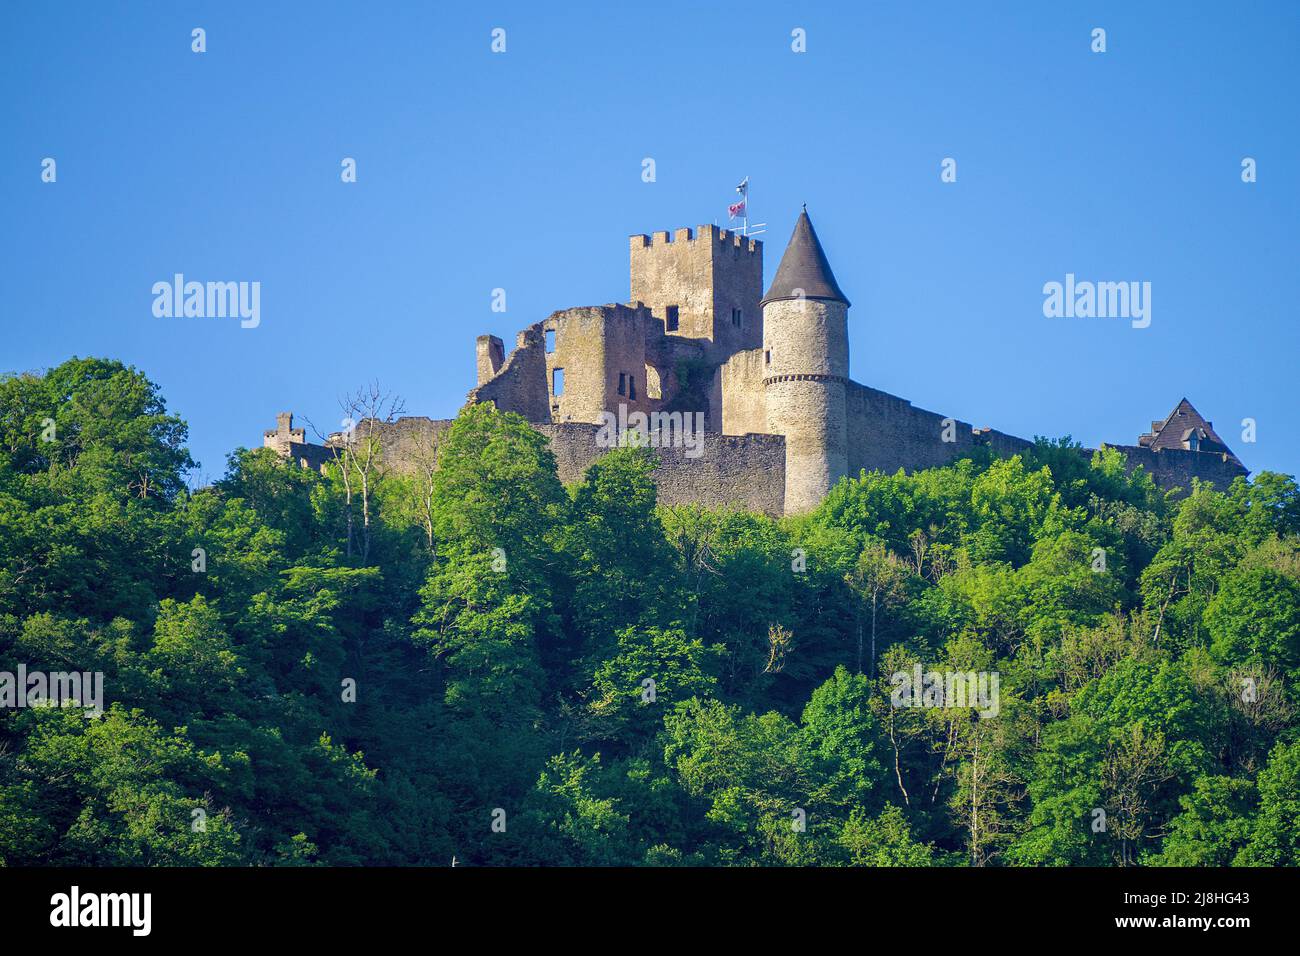 Château de Bourscheid, château médiéval à Bourscheid, quartier Diekirch, Ardennes, Luxembourg, Europe, Banque D'Images